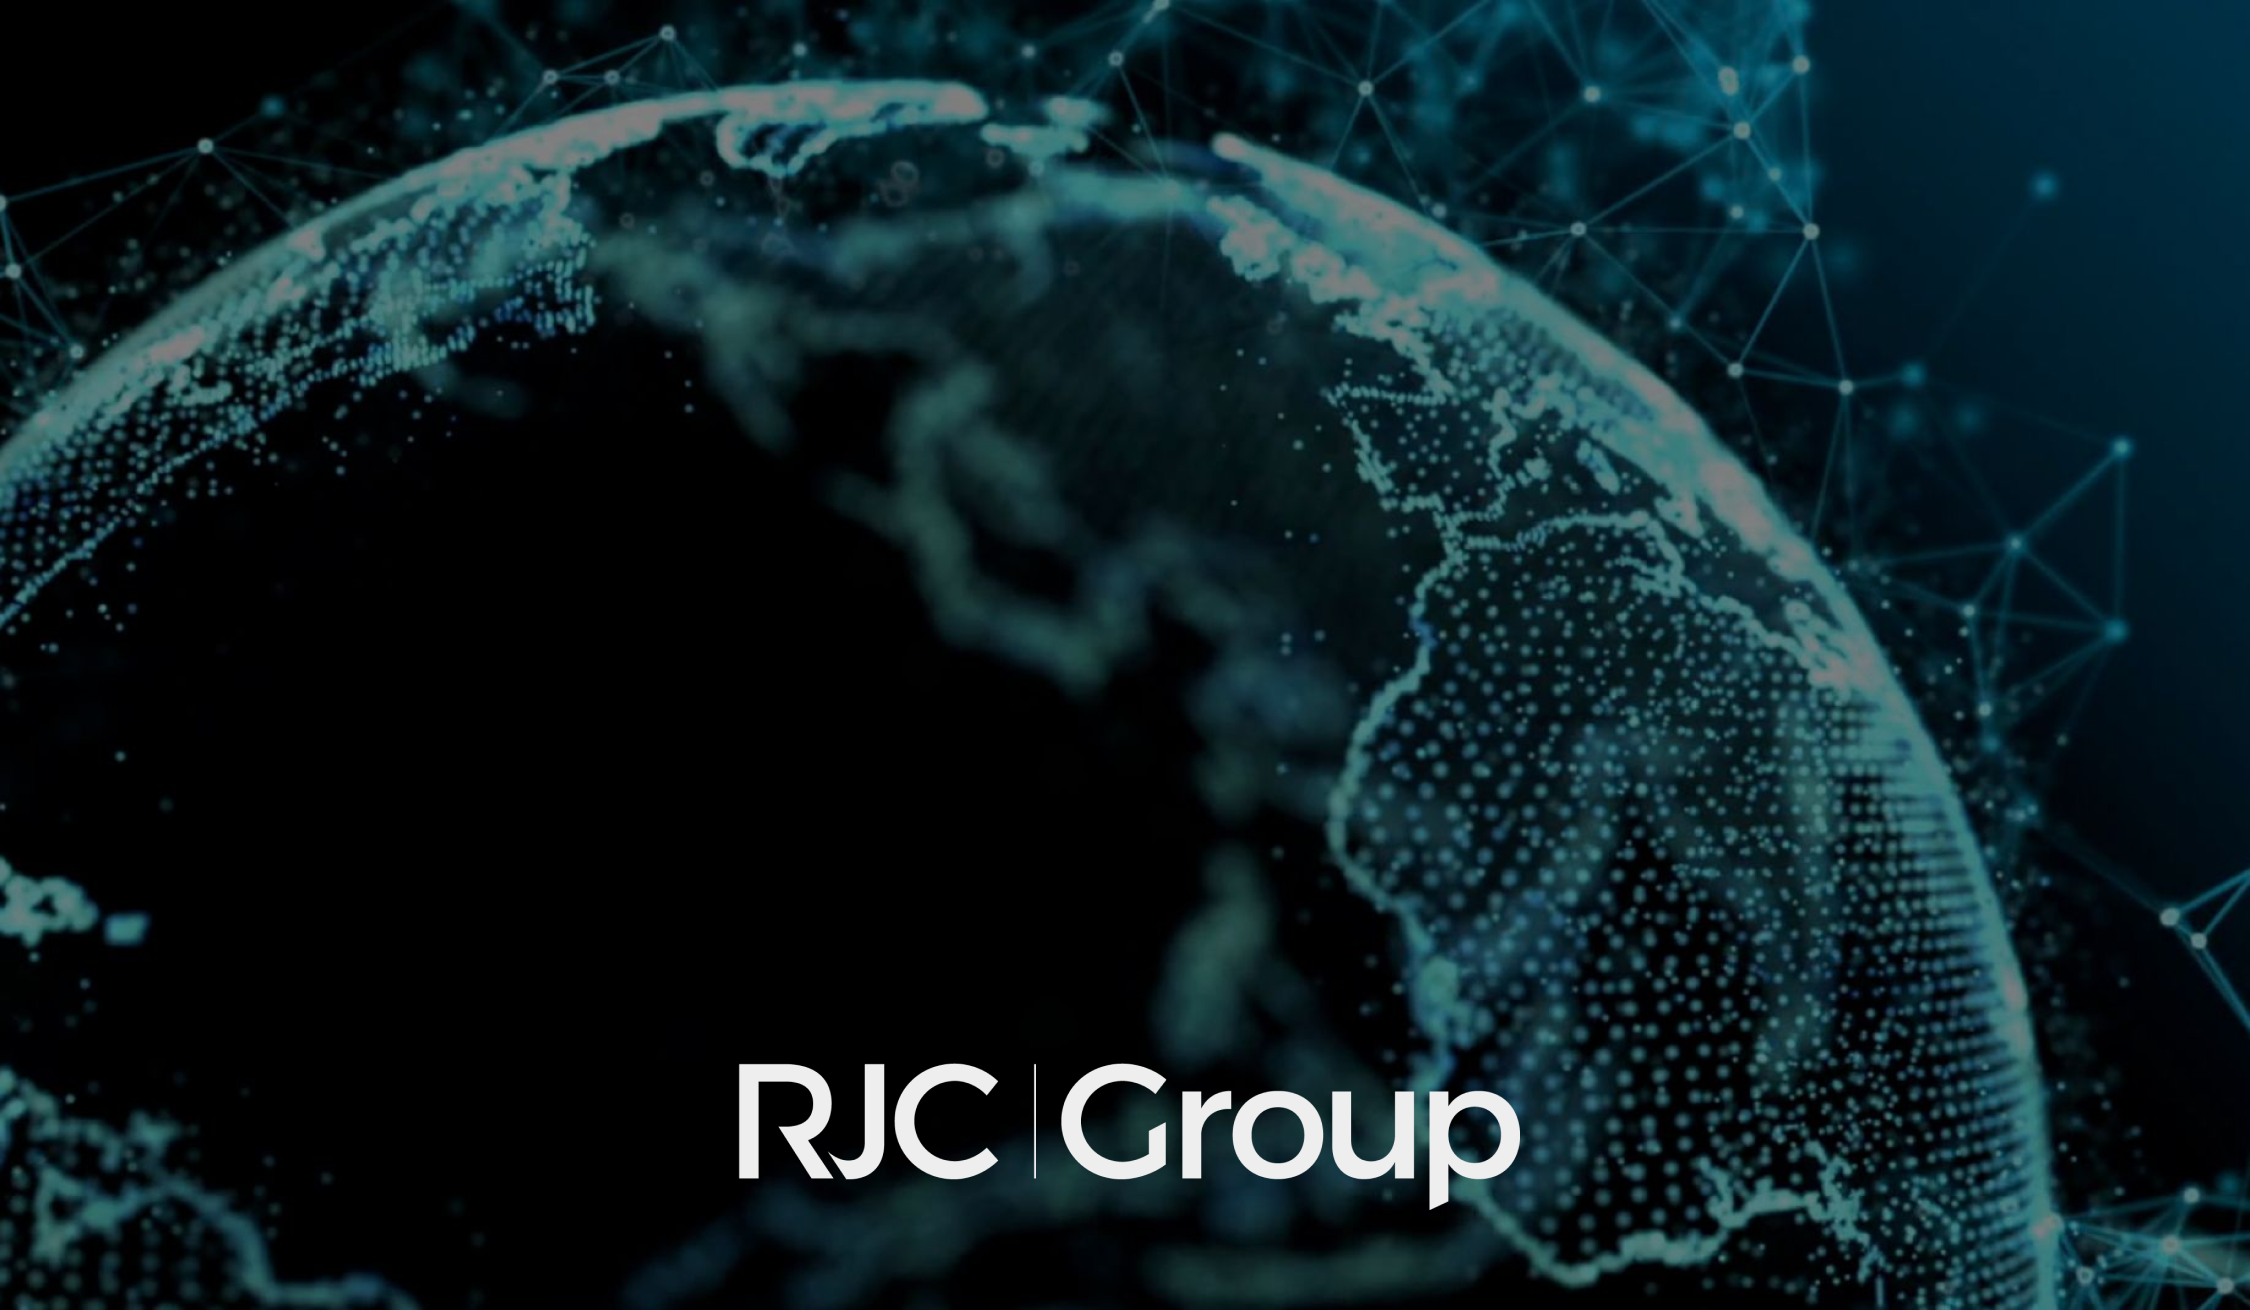 RJC group